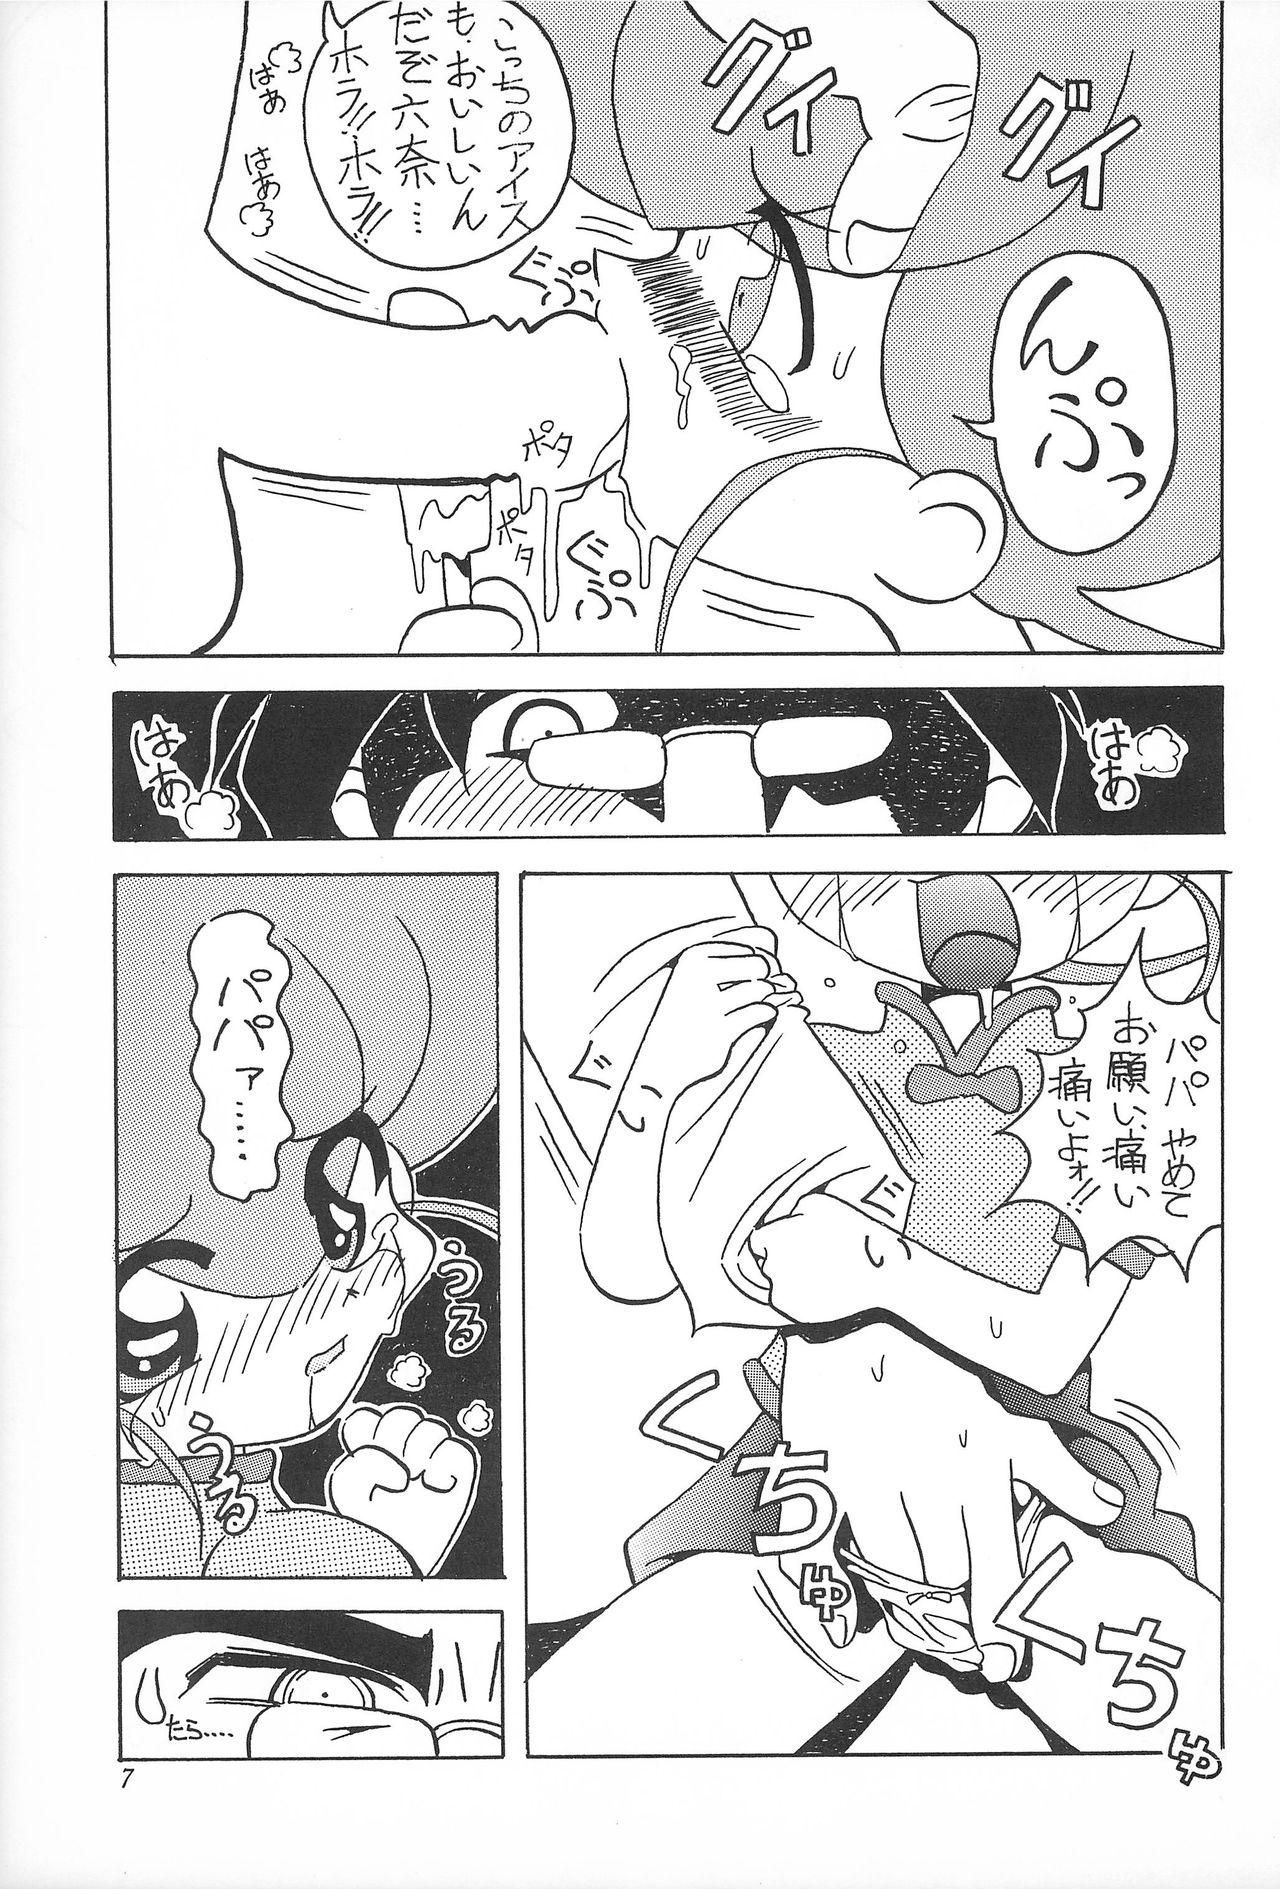 Unshaved Rokushin Gattai - Magewappa 13 - Mon colle knights Throat Fuck - Page 8